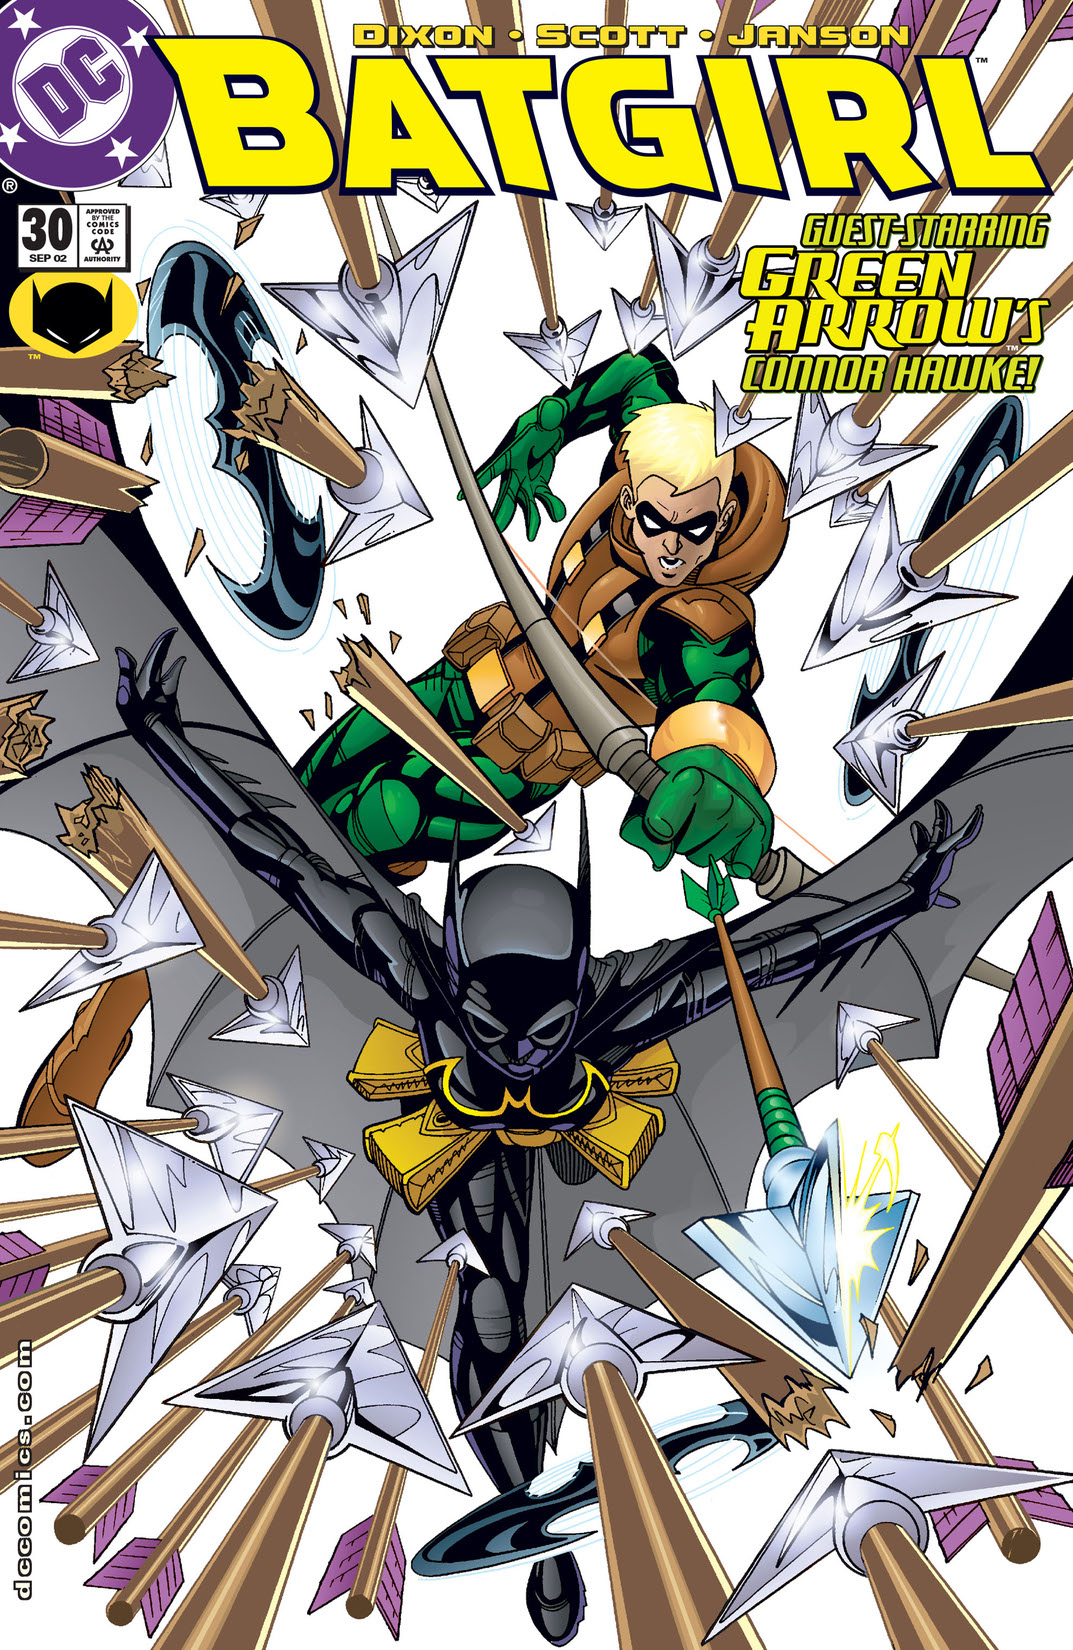 Batgirl (2000-) #30 preview images